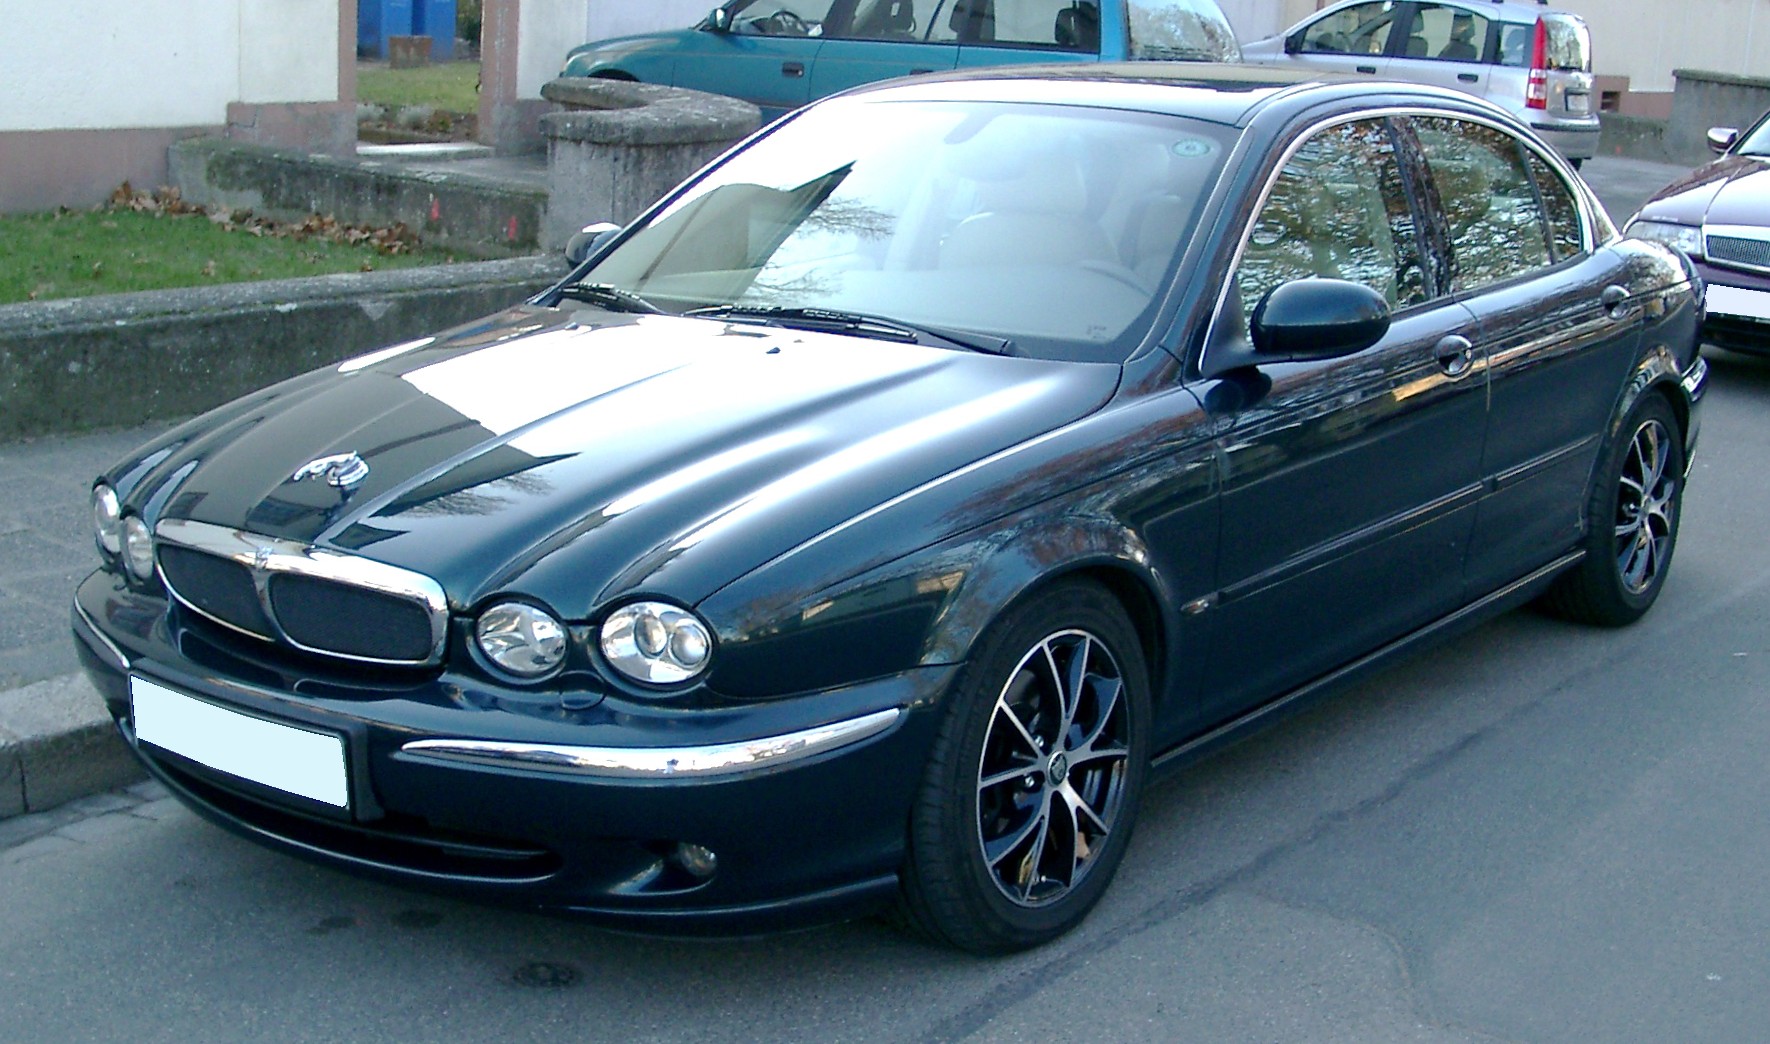 File:Jaguar X-Type front 20071217.jpg - Wikimedia Commons